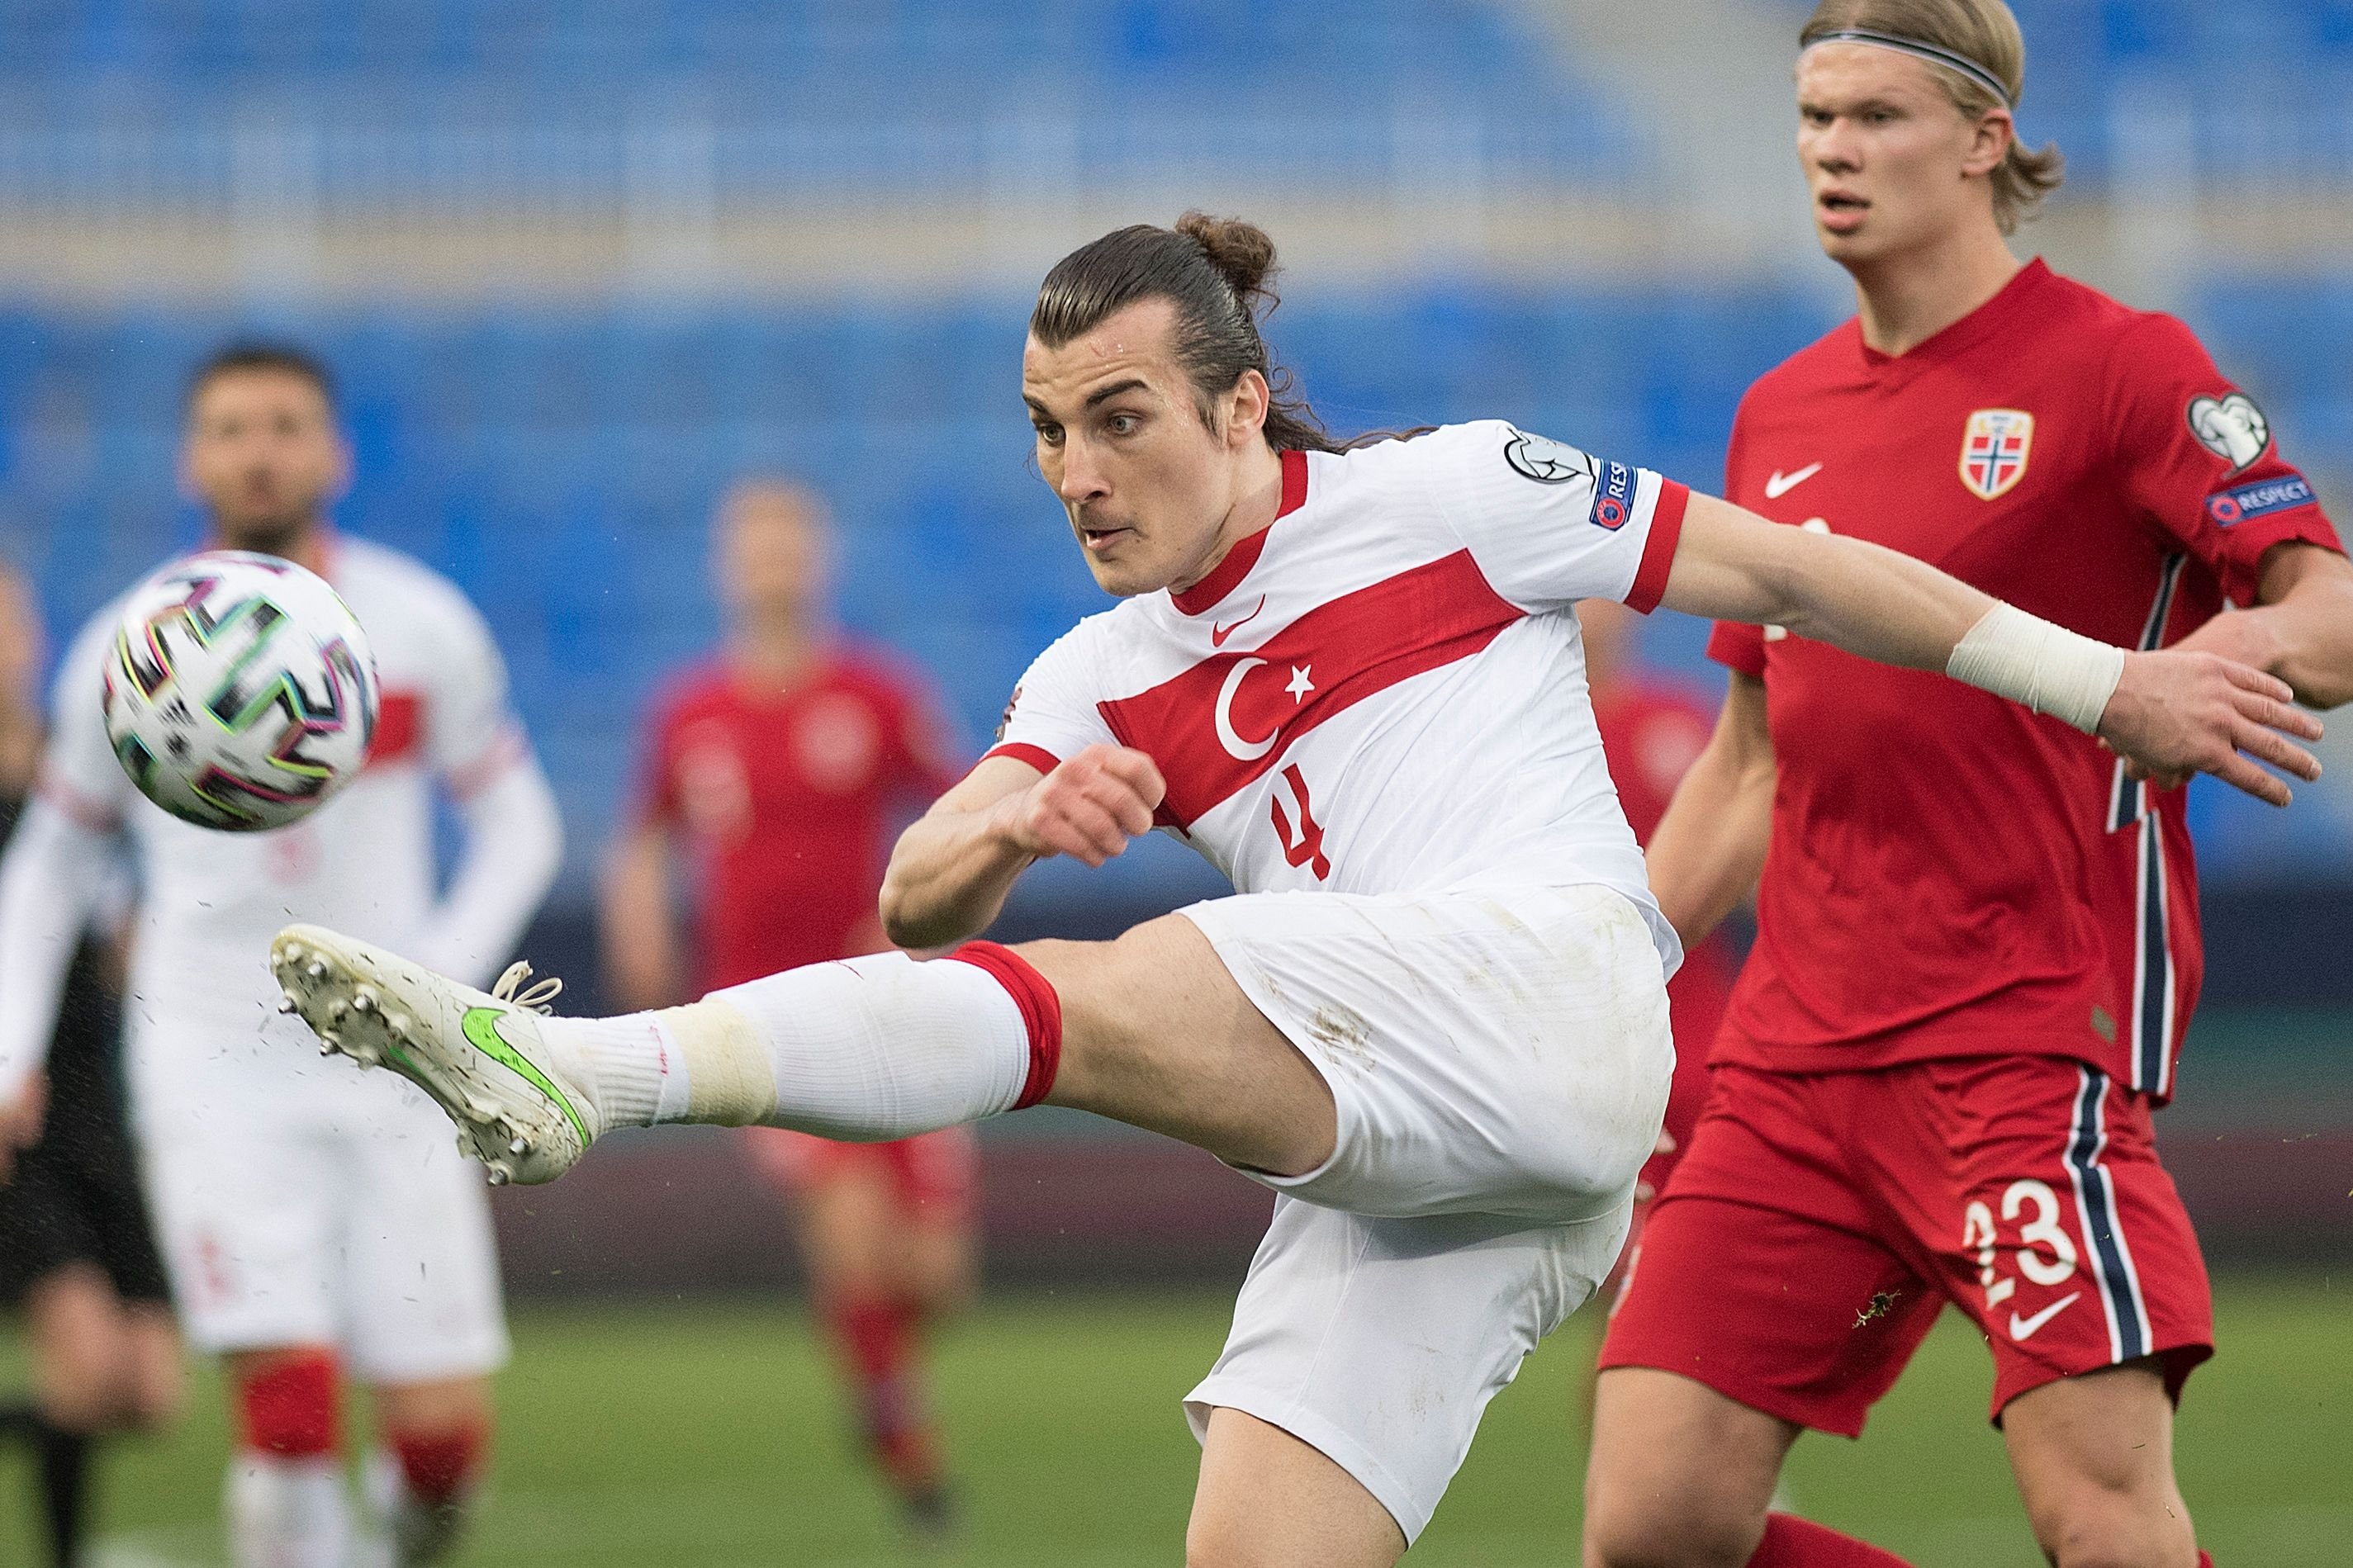 Leicester's Söyüncü latest COVID-19 positive player from Turkey squad | Daily Sabah